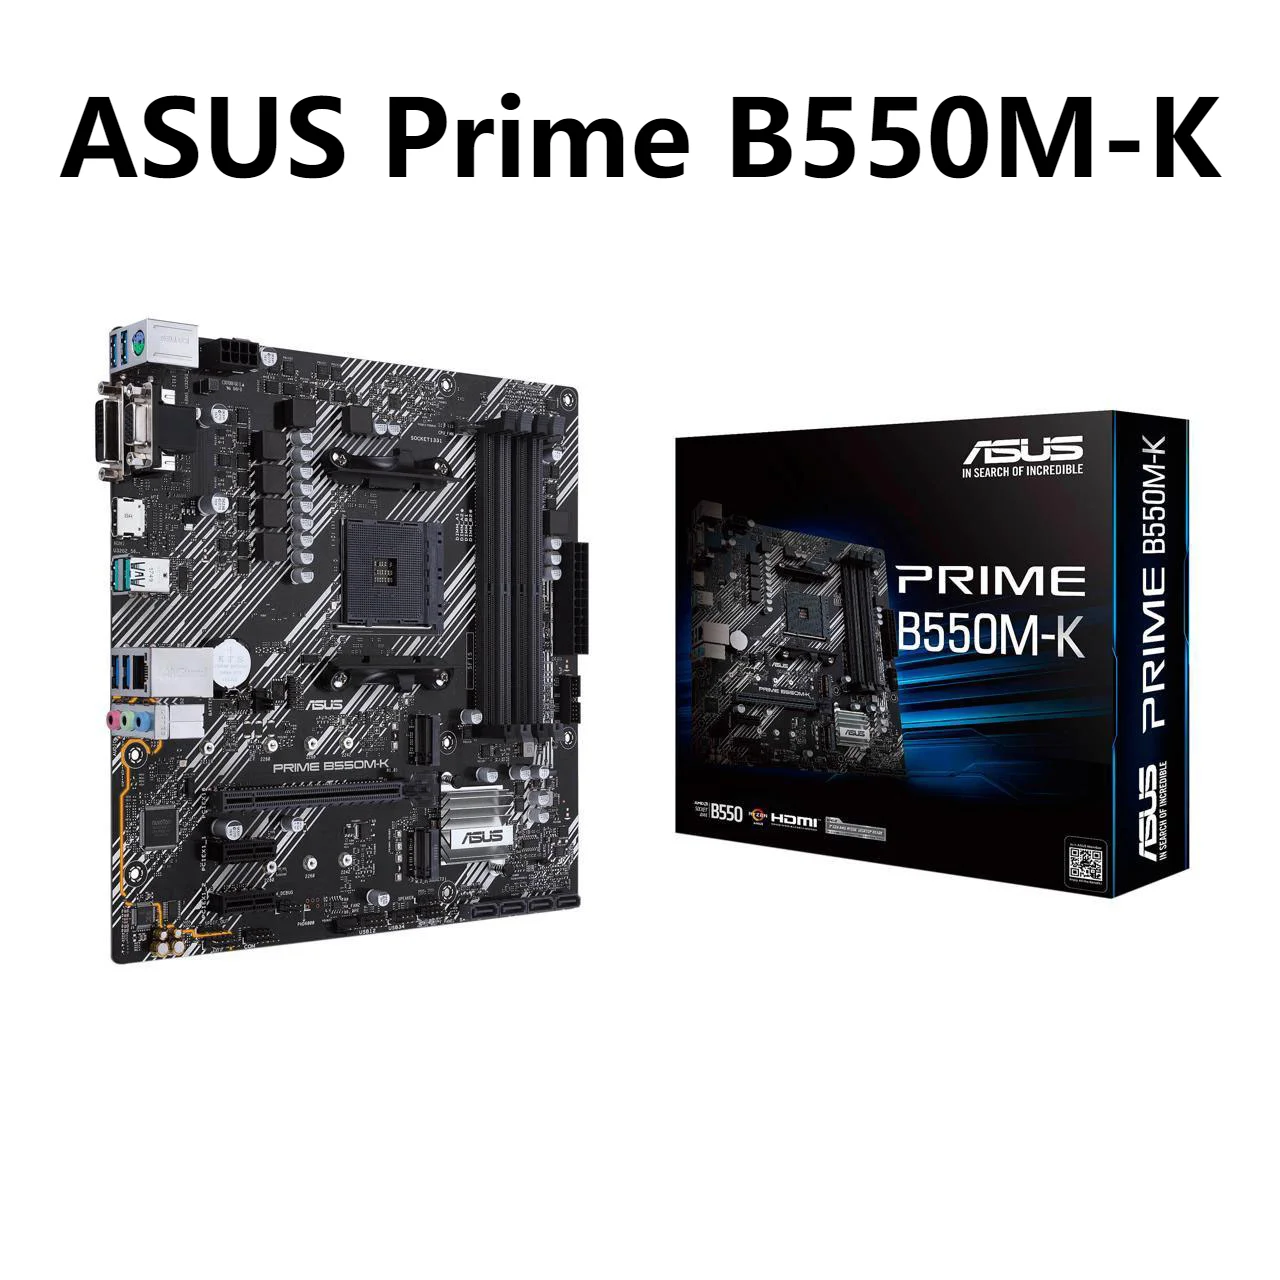 

ASUS PRIME B550M-K Motherboard AM4 AMD B550 Zen 3 Ryzen 5000/3rd Gen CPUs SATA 6Gb/s USB 3.0 HDMI Micro ATX PCIe 4.0 Dual M.2